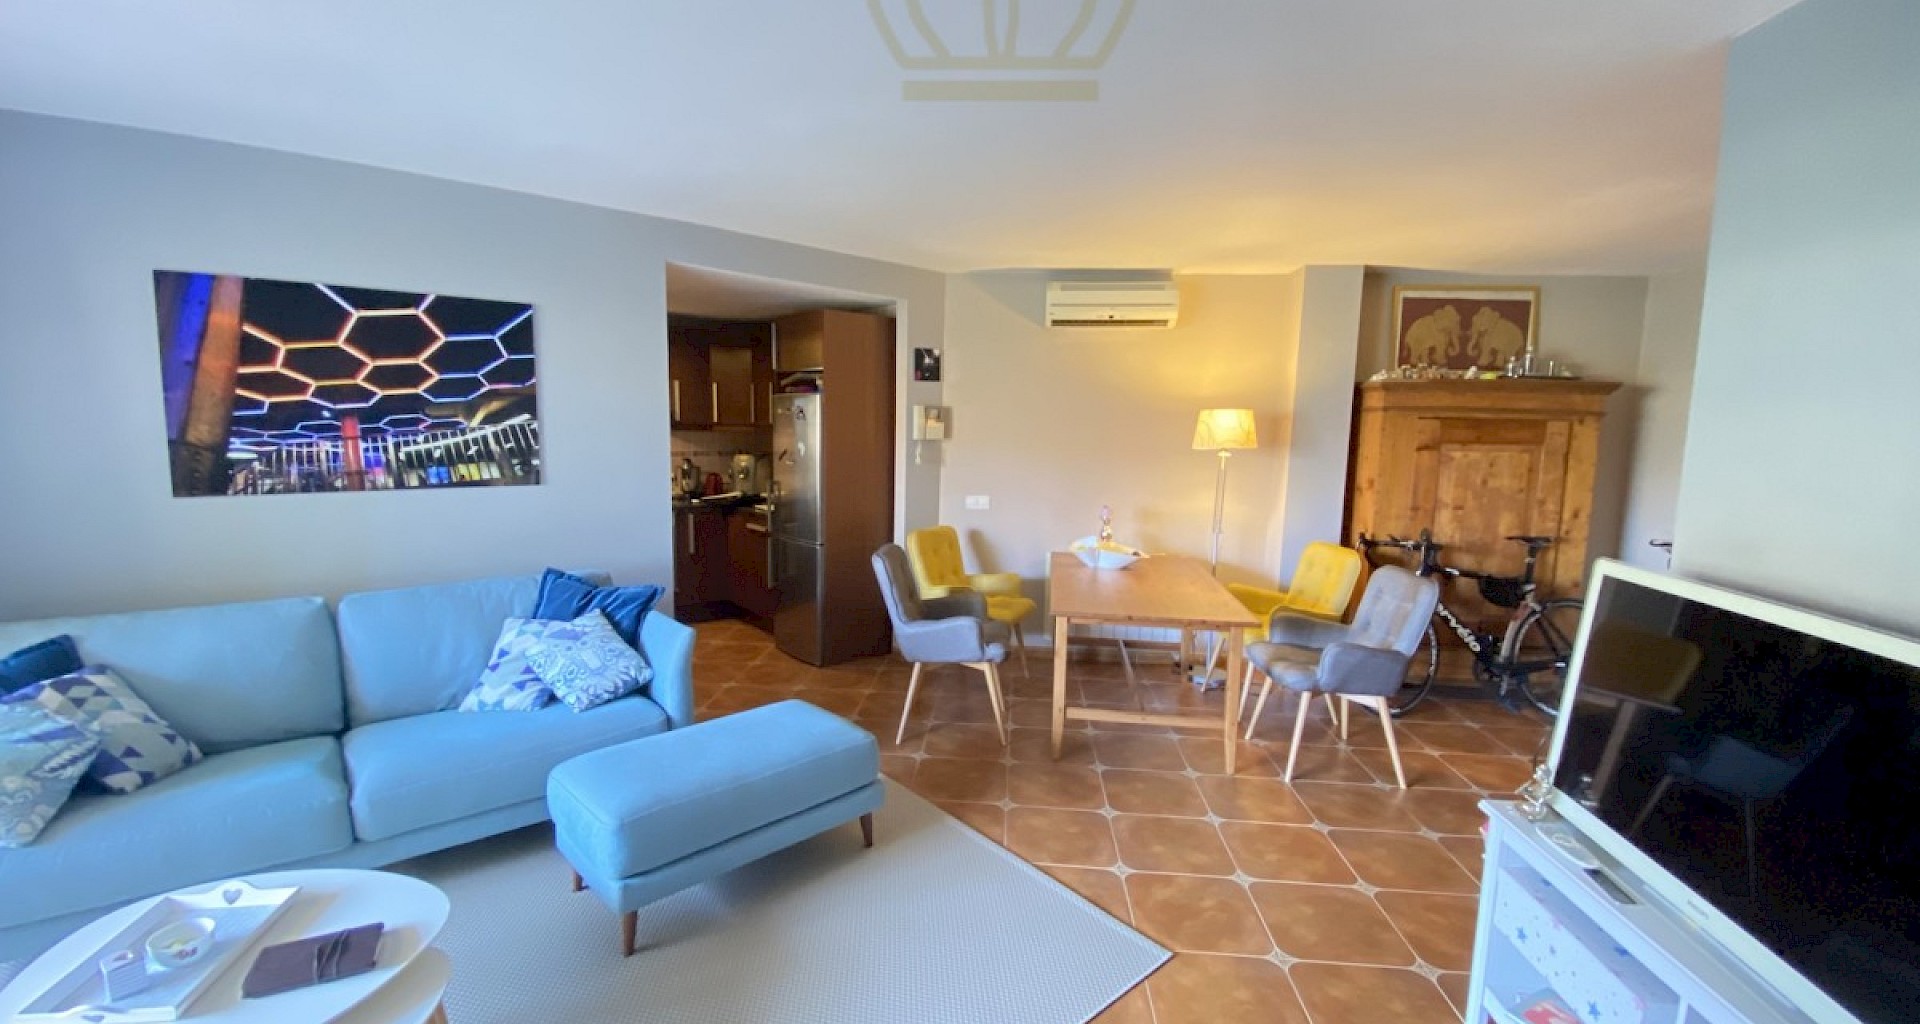 KROHN & LUEDEMANN Precioso piso de vacaciones en Puigderros cerca de Palma de Mallorca Puig de Ross Apartment